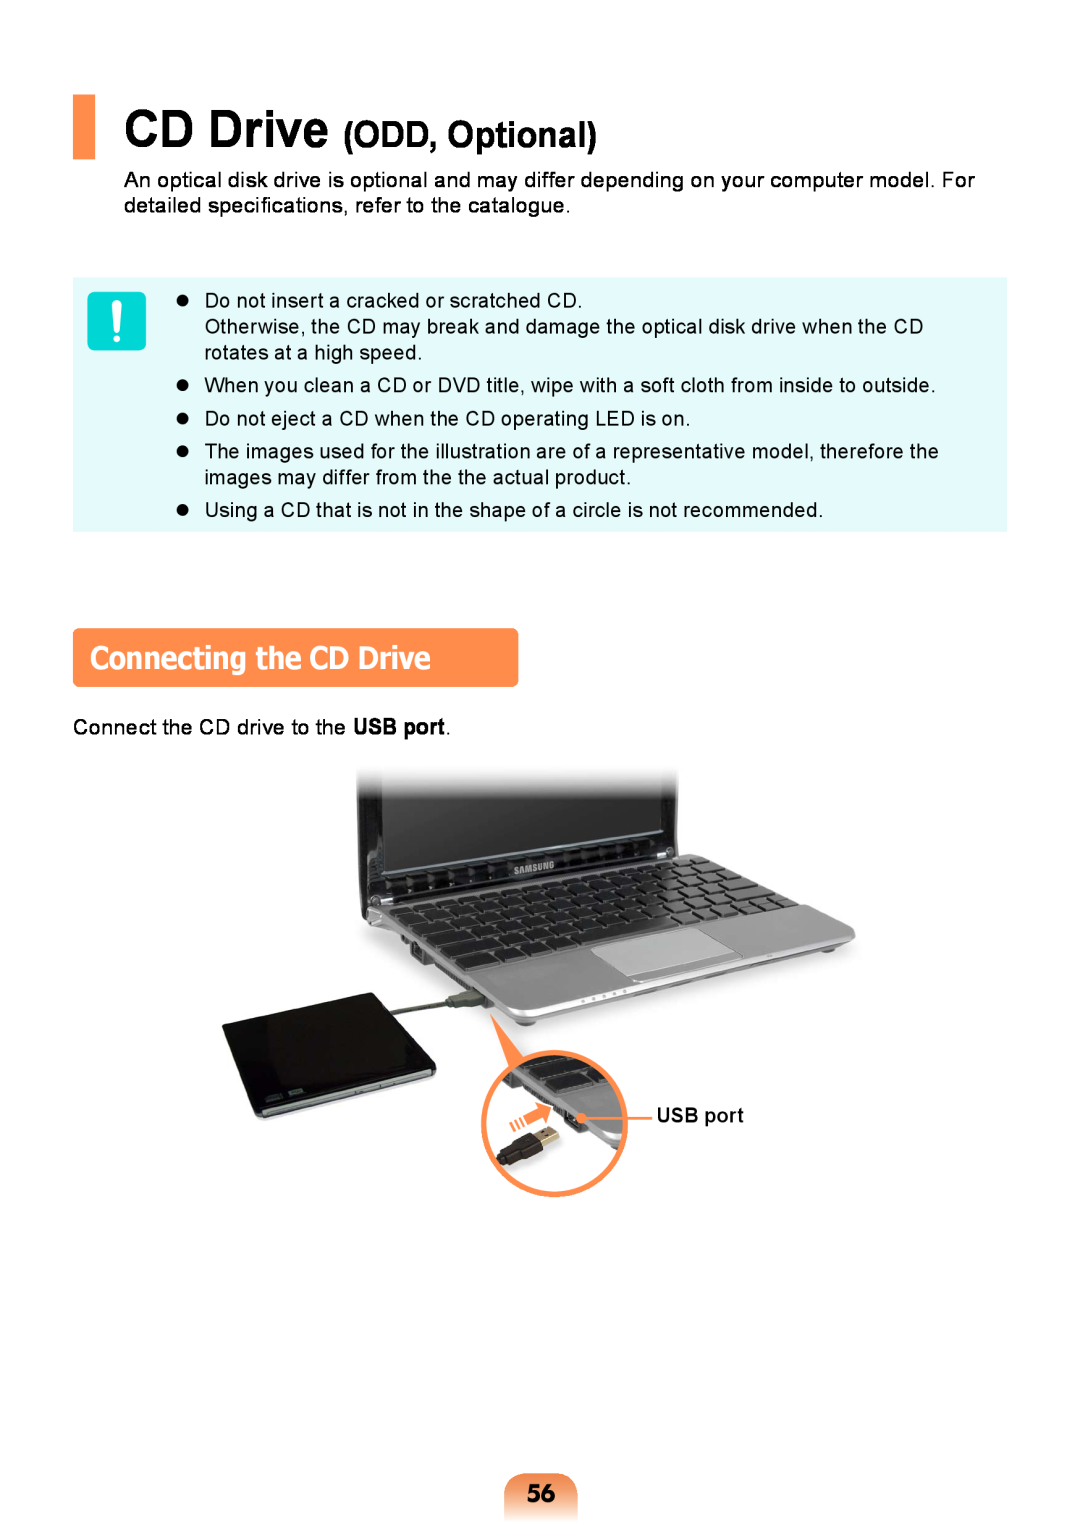 Samsung NP-RV408-A01RU, NP-RV408-A01UA, NP-RV408-A01VN manual Connecting the CD Drive, CD Drive ODD, Optional, USB port 